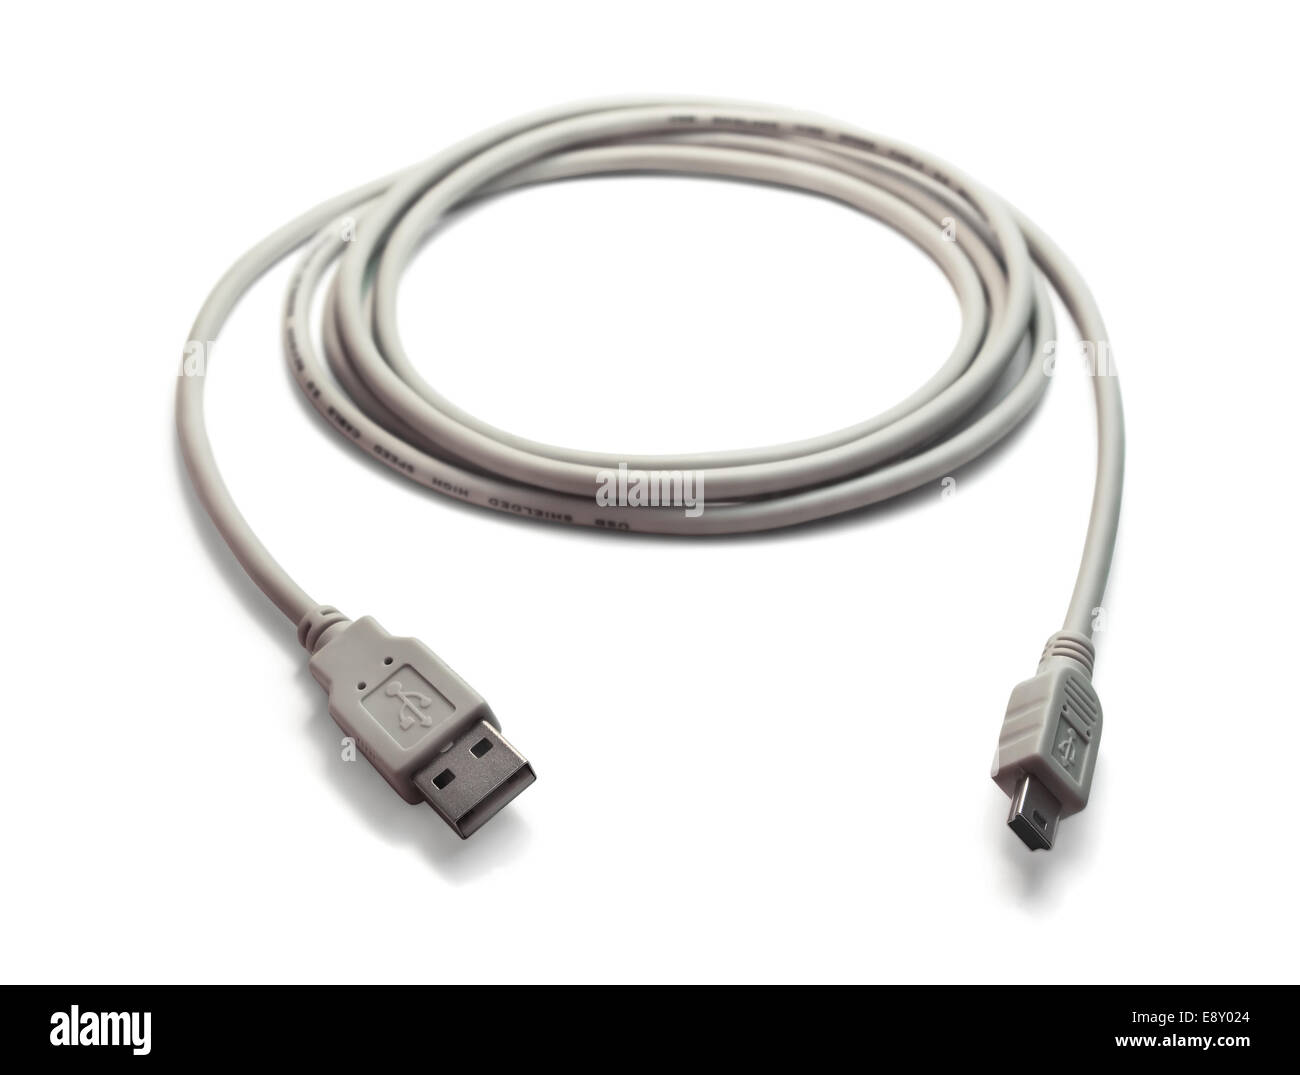 USB - mini USB cable Stock Photo